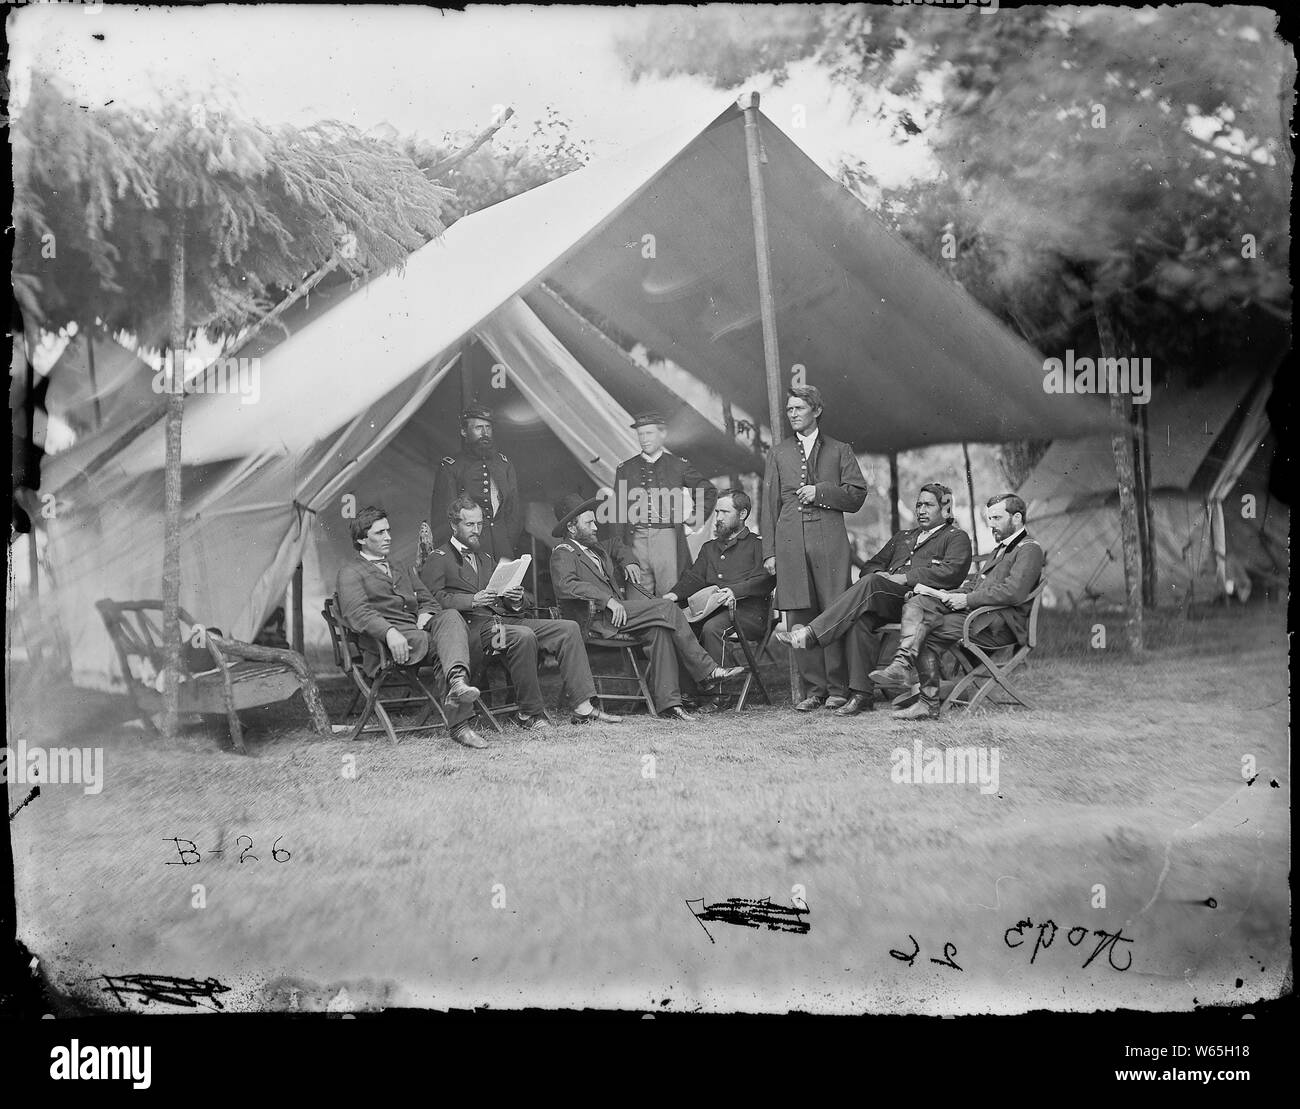 Gen. Ulysses S. Grant und acht Mitarbeitern, anerkannt - Maj. O.E. Babcock, Kol. Wm. McK.Dunn, Kapitän Henry W. Janes, Oberst Ely S. Parker, Gen. Cyrus B. Comstock, Kapitän Peter T. Hudson, Oberst Michael R. Morgan, General John A. Rawlins Stockfoto